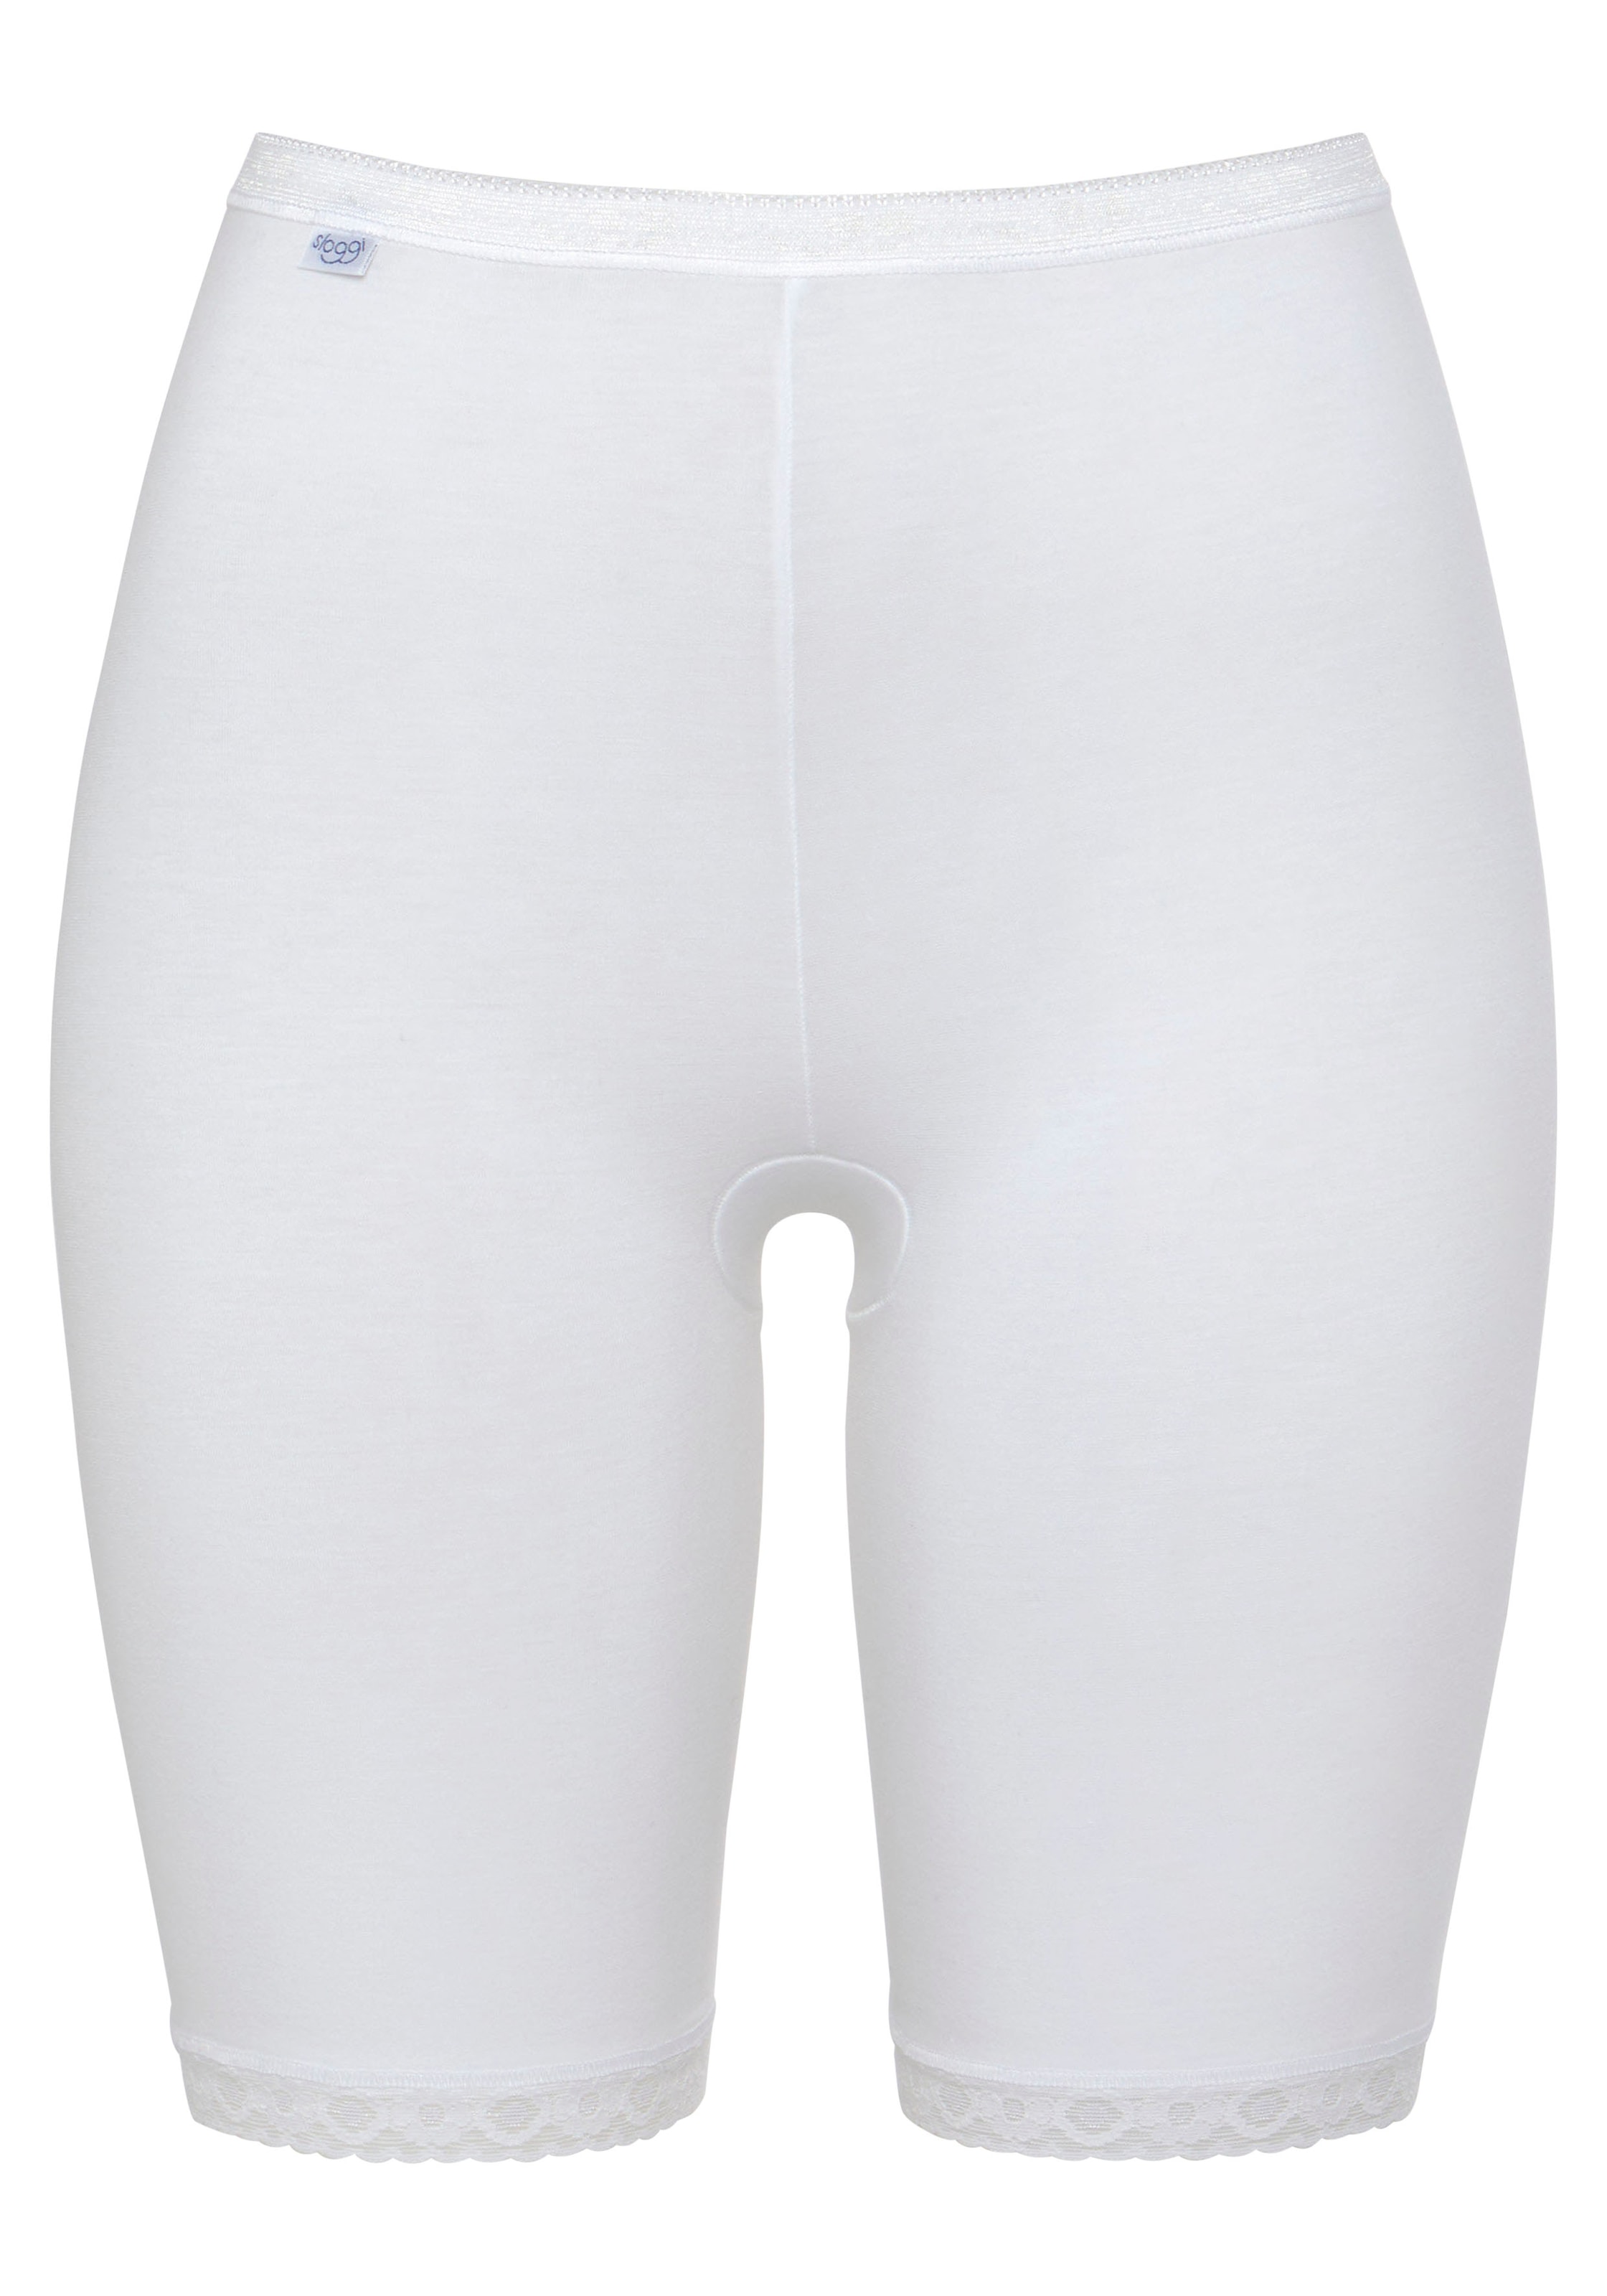 sloggi Lange Unterhose »Basic+ Long 2P«, (Packung, 2 St.), Long-Pants mit Spitzenbesatz